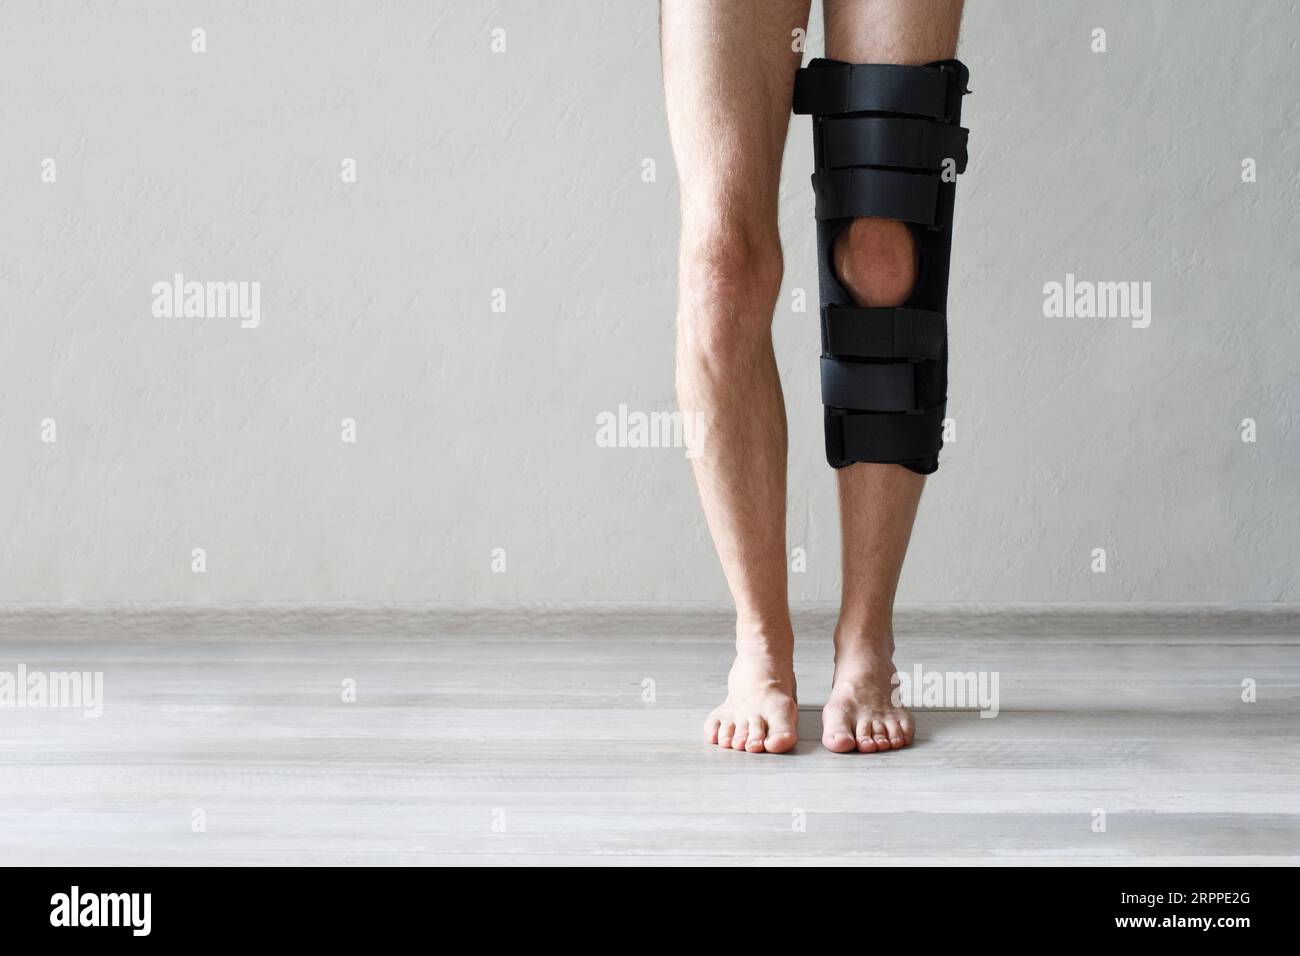 Leg brace on knee against gray wall background, knee brace support for ...